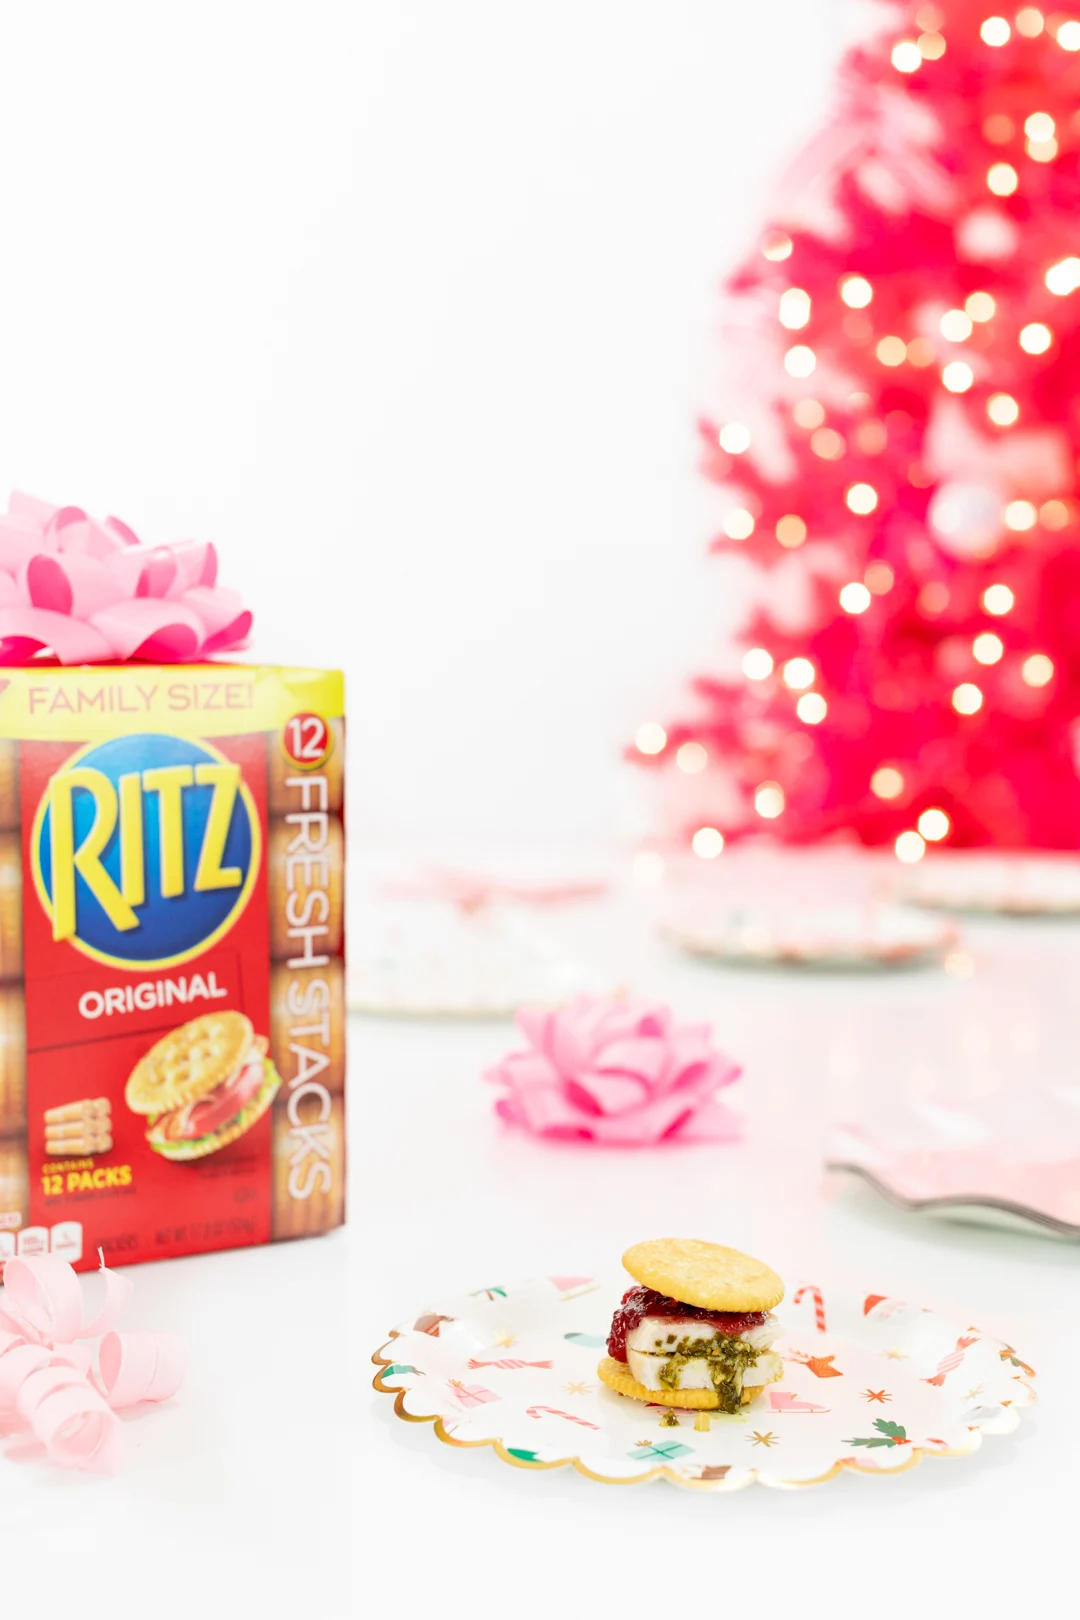 Ritz Cracker Box and Pink Christmas Tree